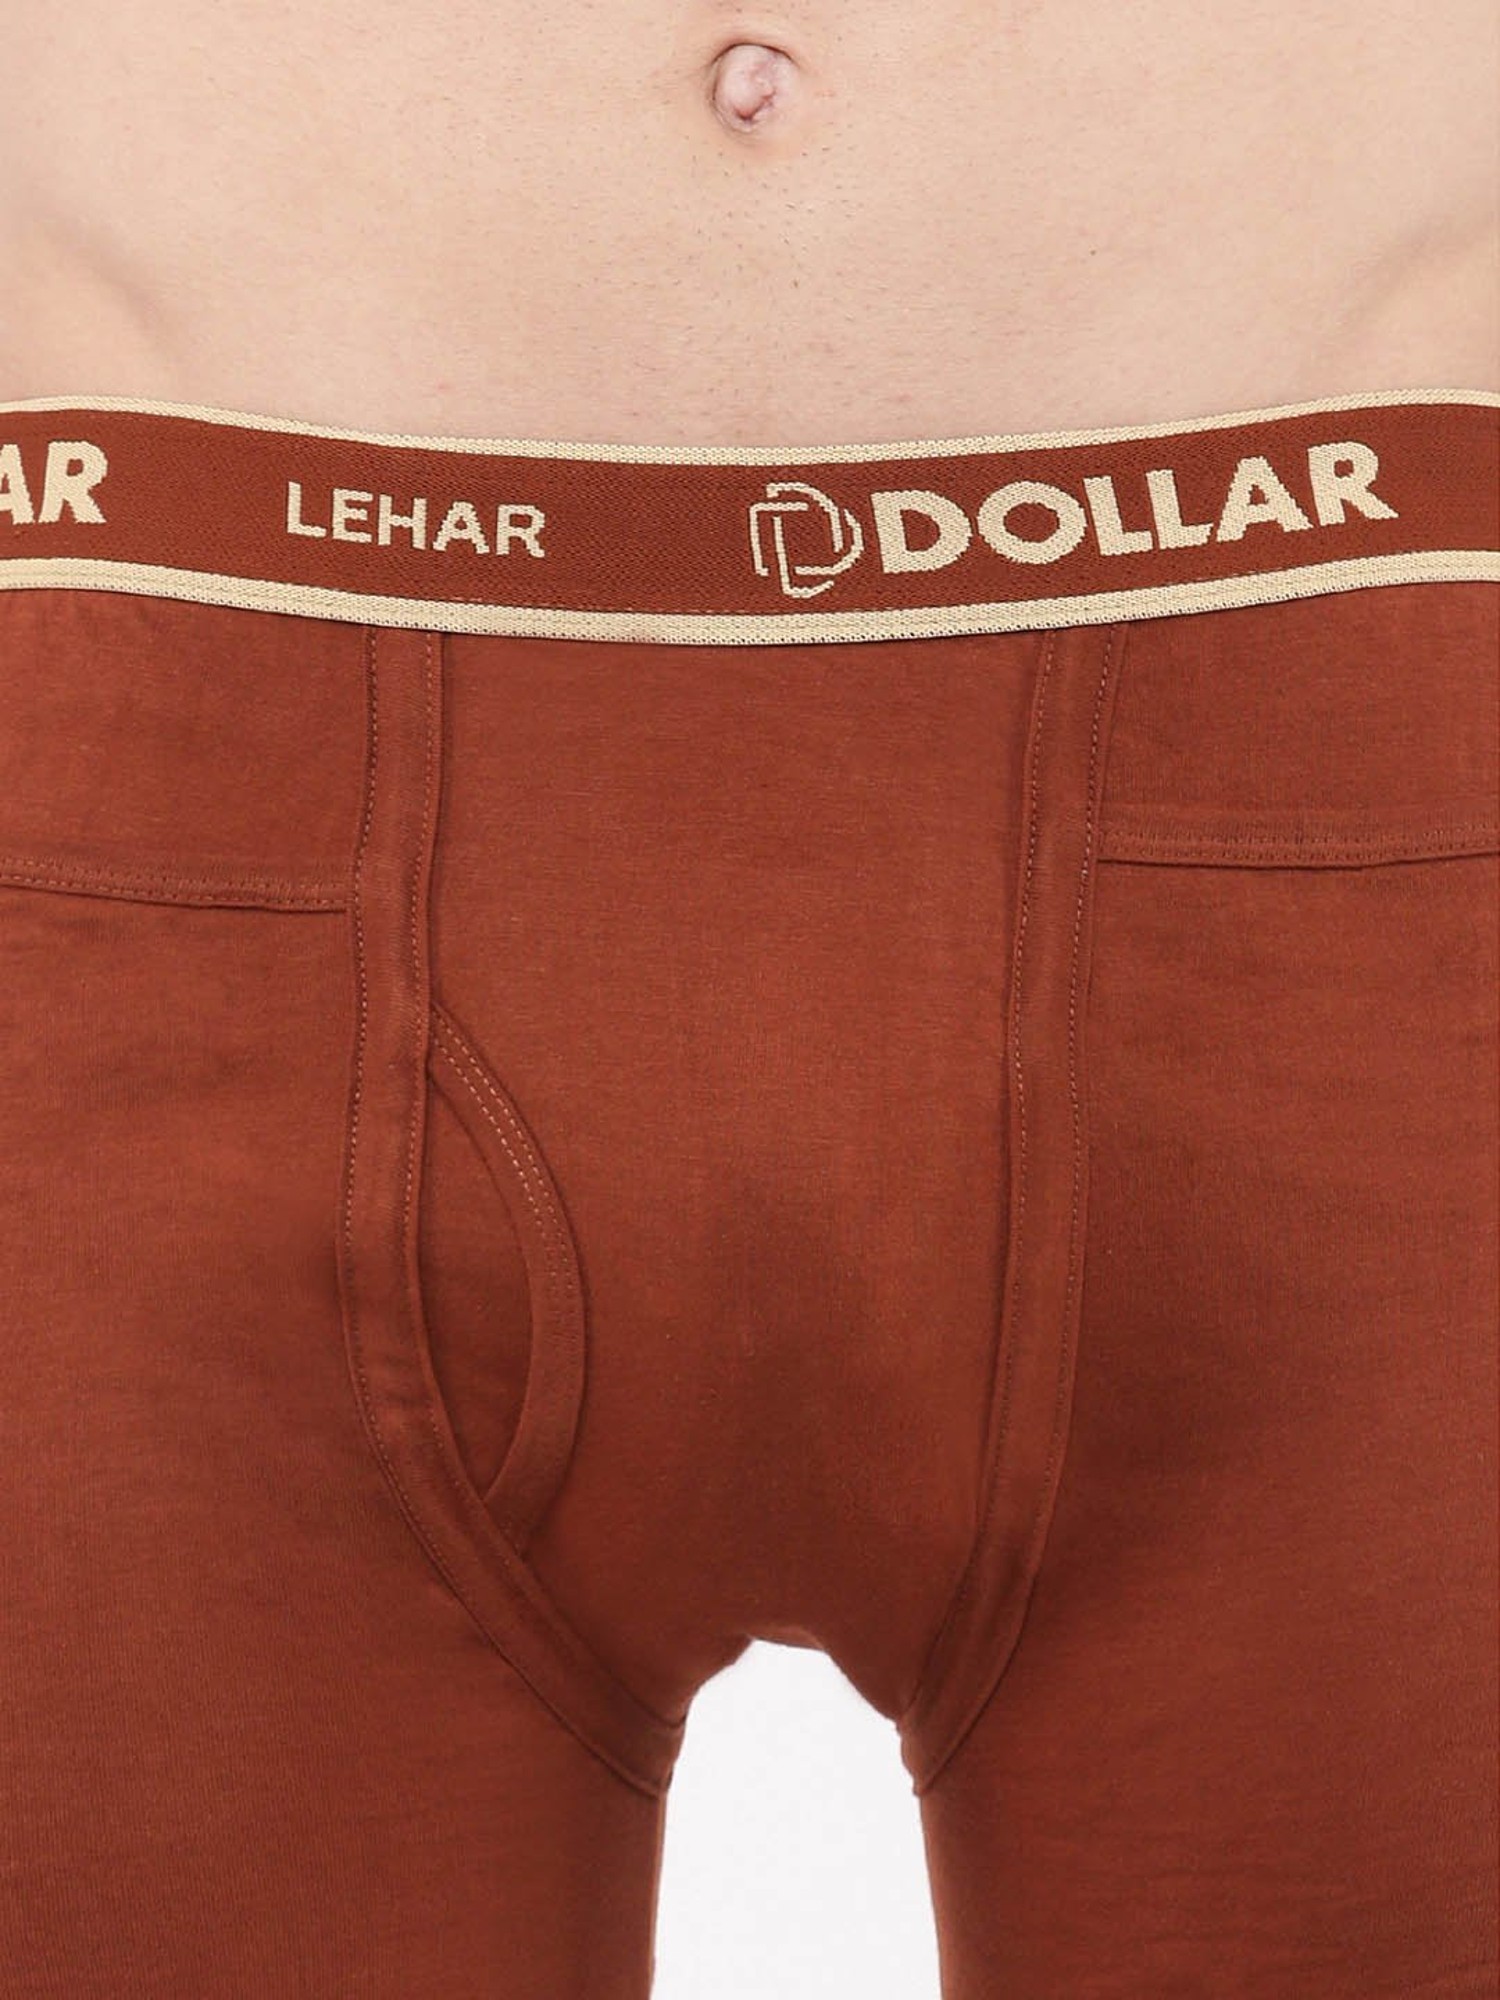 Buy Dollar Lehar Multicolor Regular Fit Briefs (Pack of 5) for Men Online @  Tata CLiQ